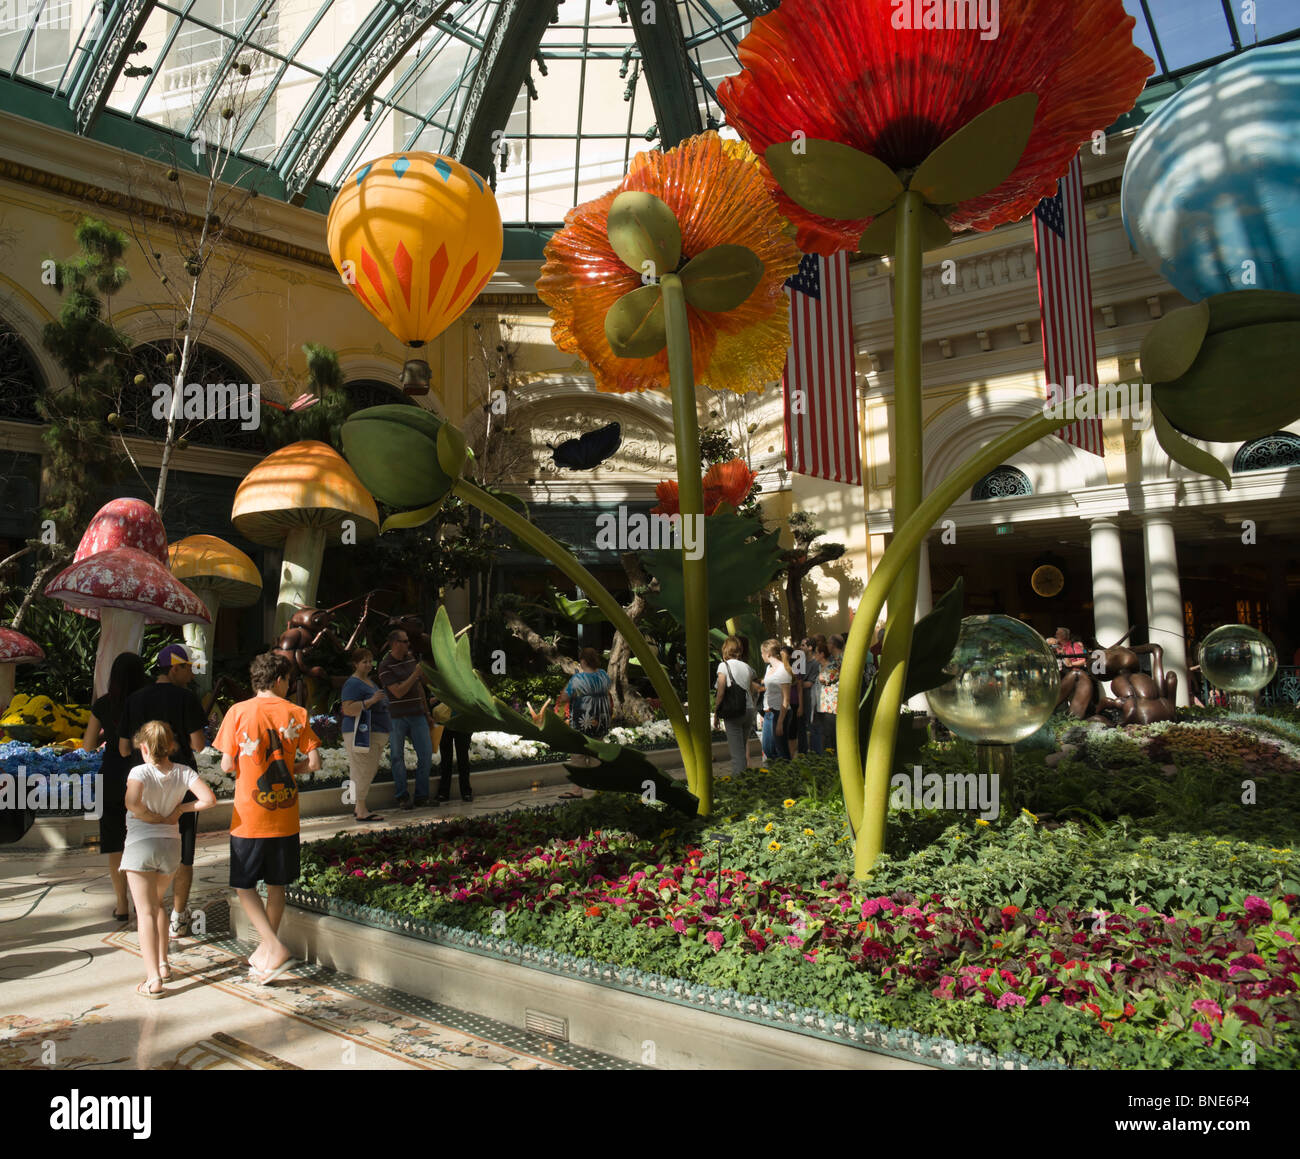 Giant flower sculpture art in the conservatory of Bellagio resort hotel, Las Vegas Stock Photo